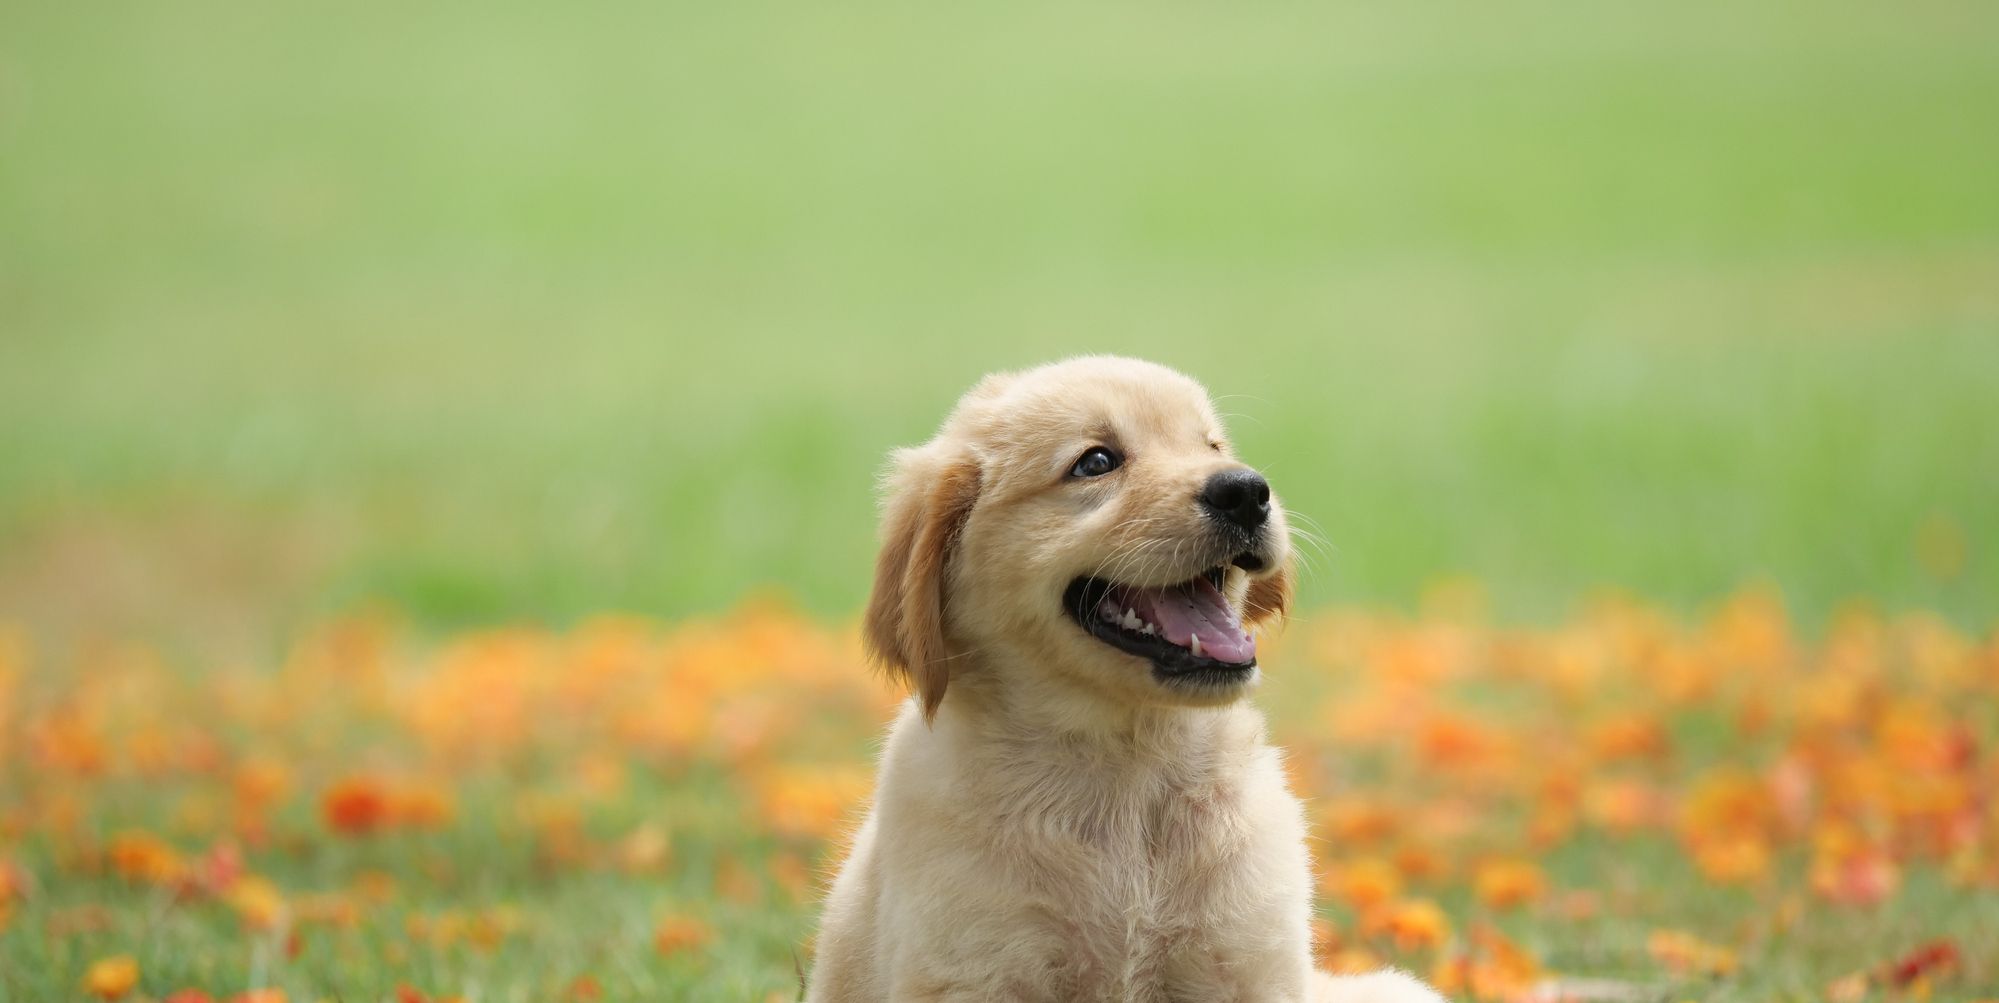 cute puppy dog breeds